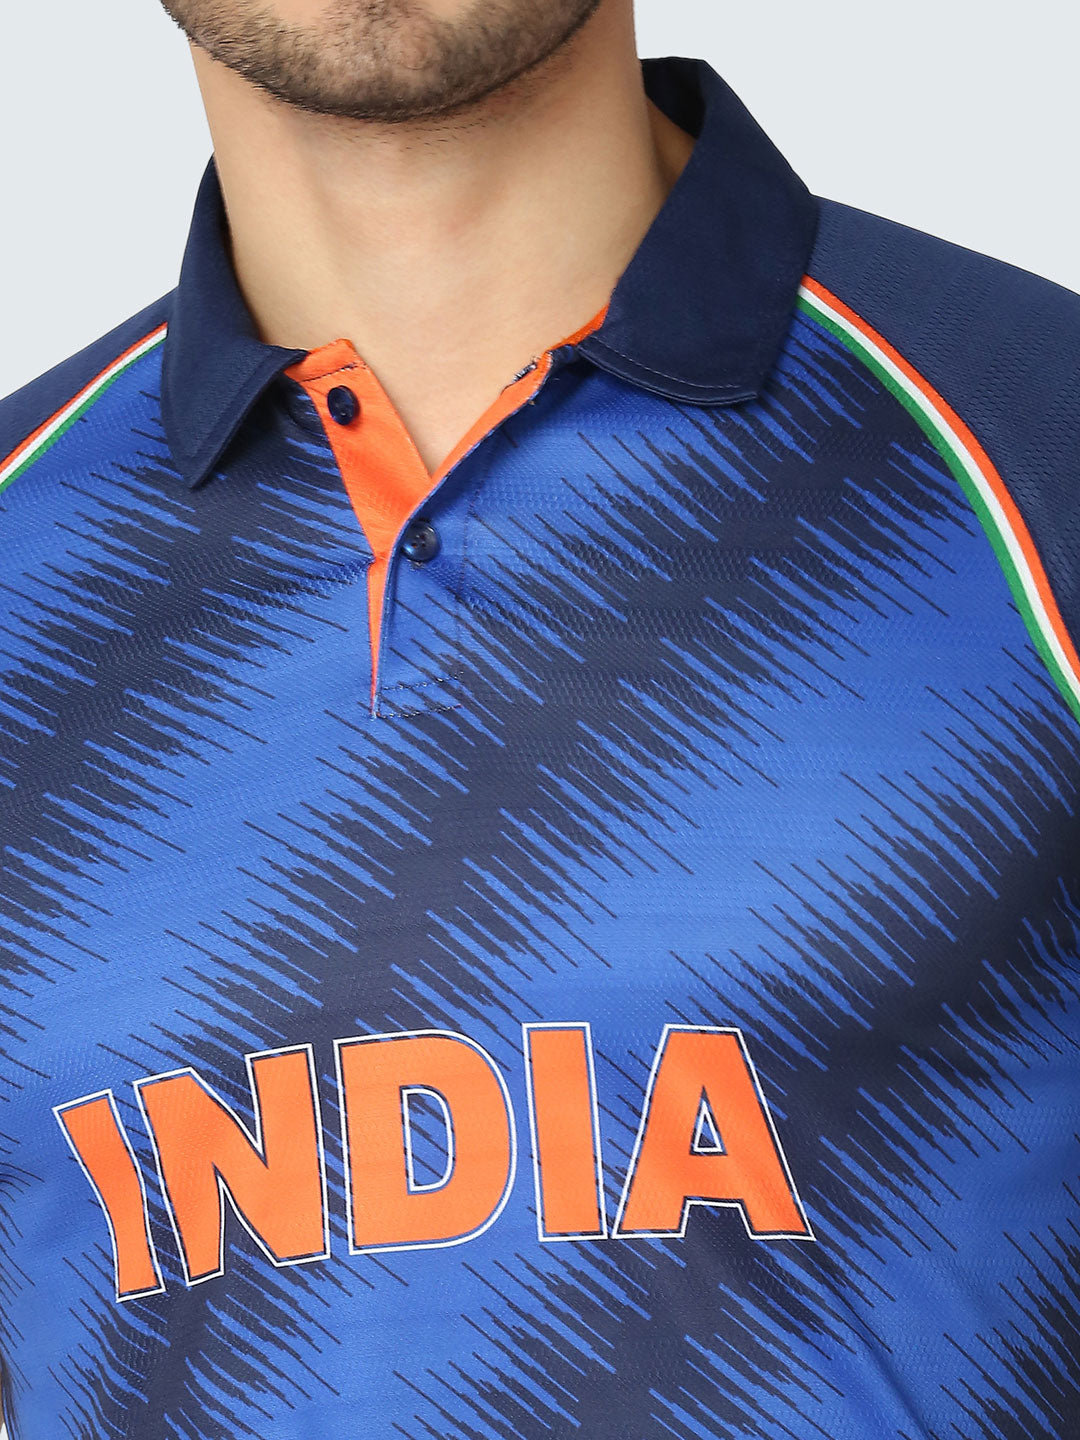 India Cricket Team Polo T-shirt